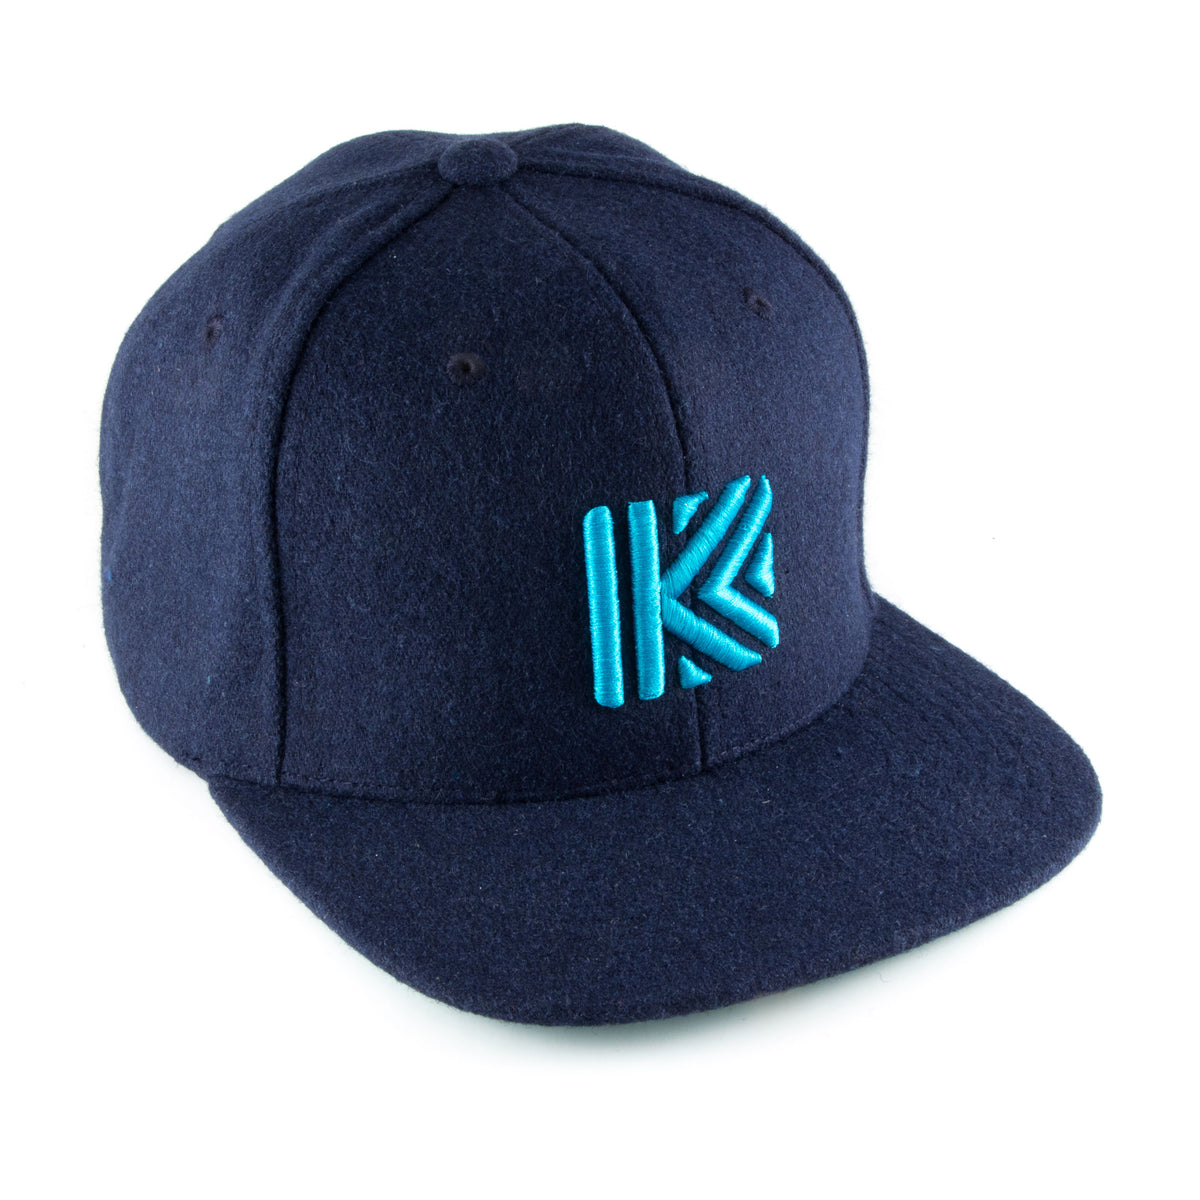 IKON Hat - Navy Blue/Teal